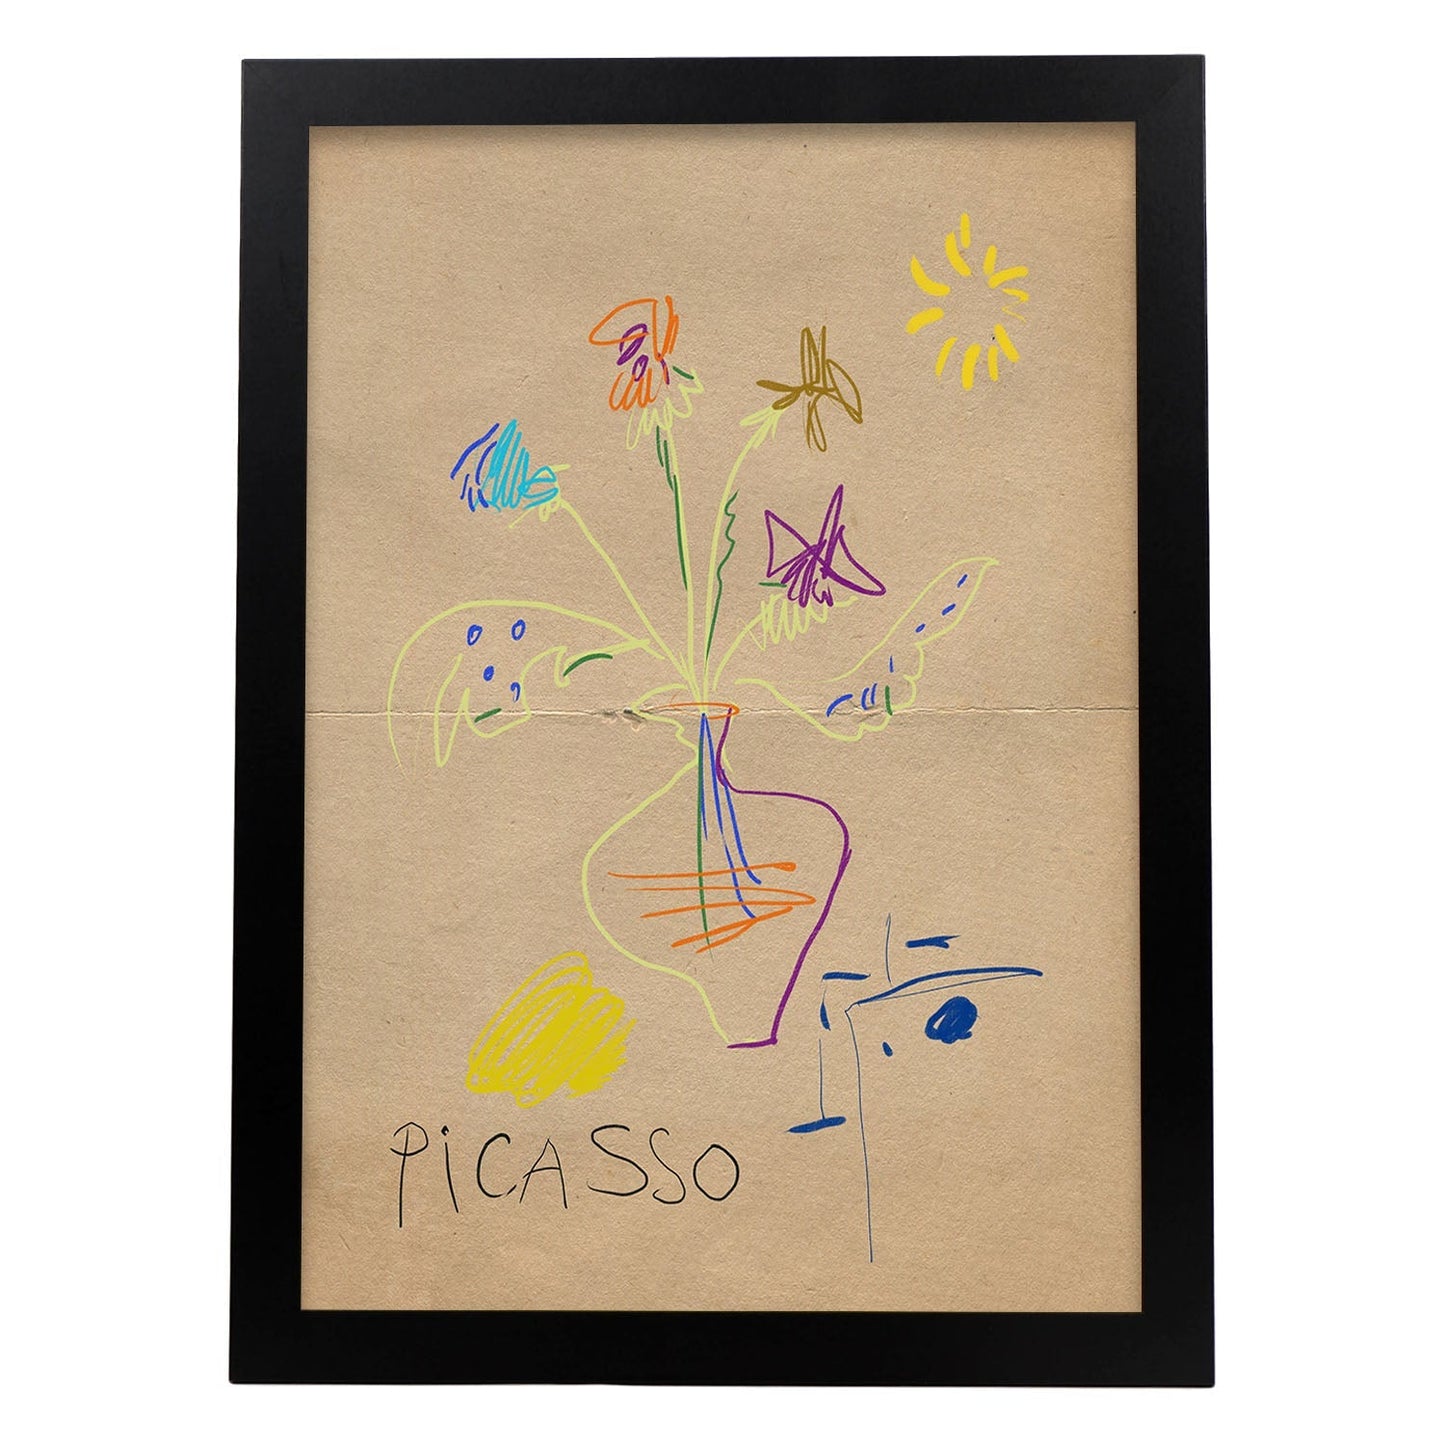 Lamina artistica decorativa con ilustración de Exposición Picasso 3-Artwork-Nacnic-A4-Marco Negro-Nacnic Estudio SL